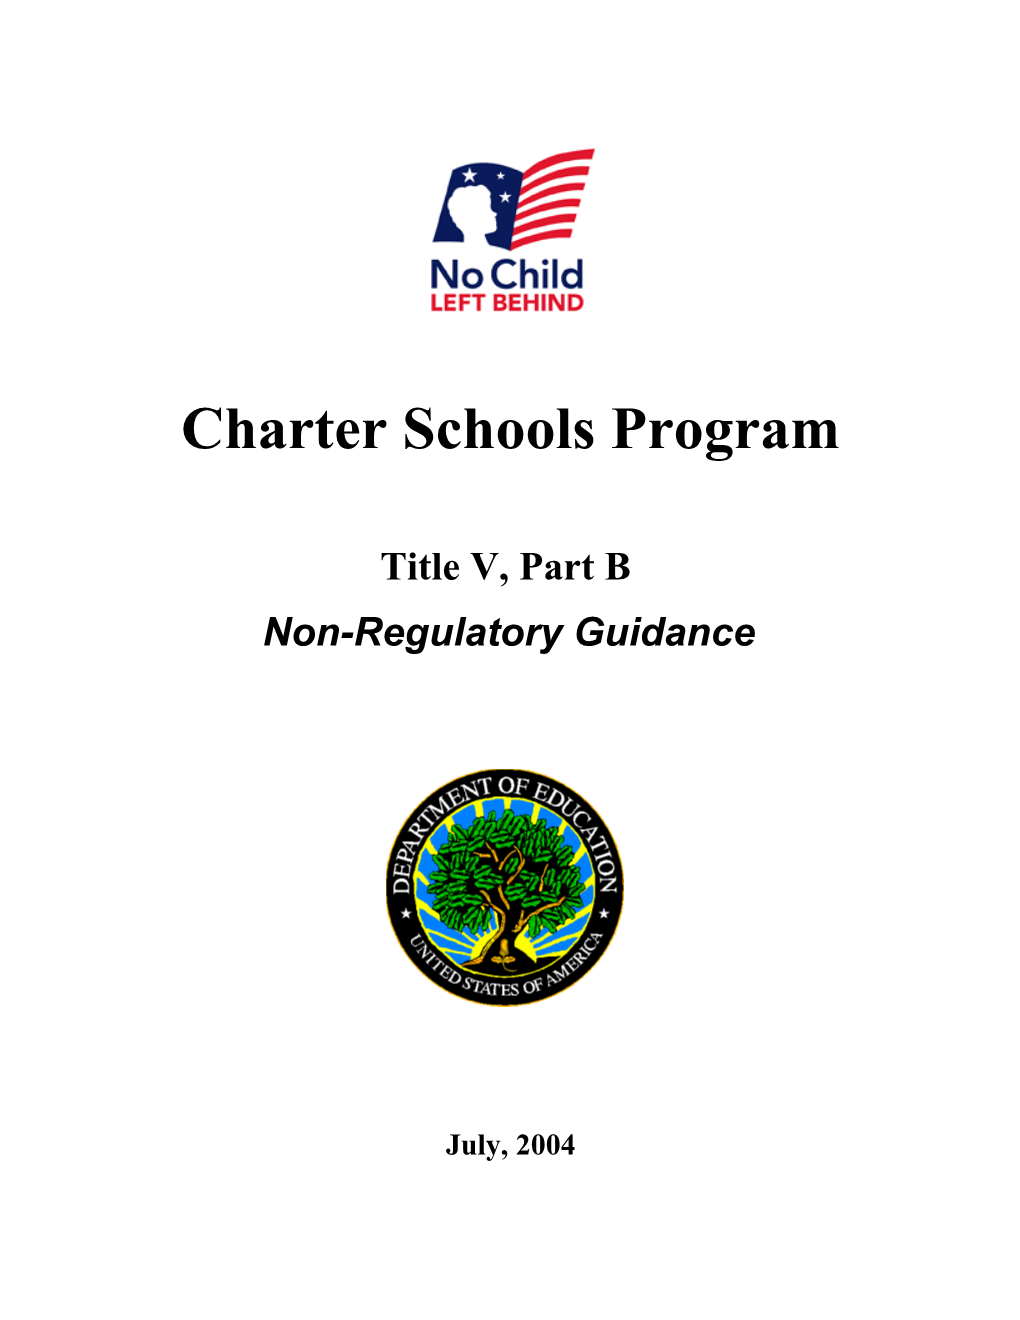 Charter School Program Guidance (Msword)